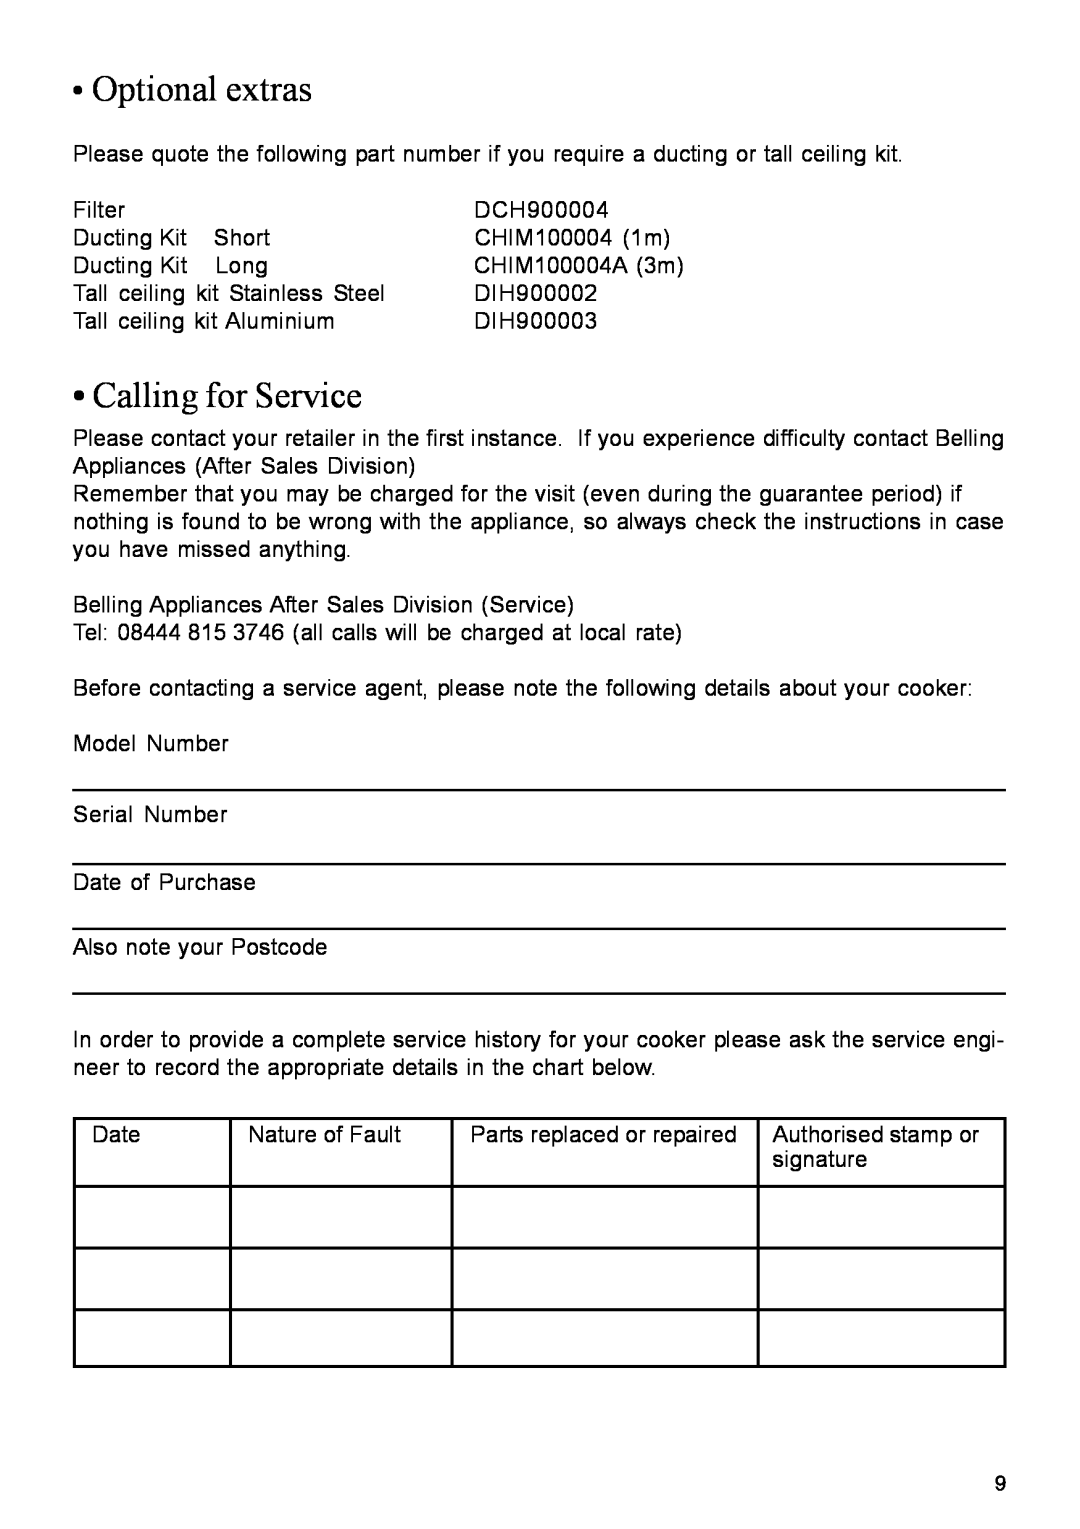 Glen Dimplex Home Appliances Ltd DIH900 manual •Optional extras, •Calling for Service 